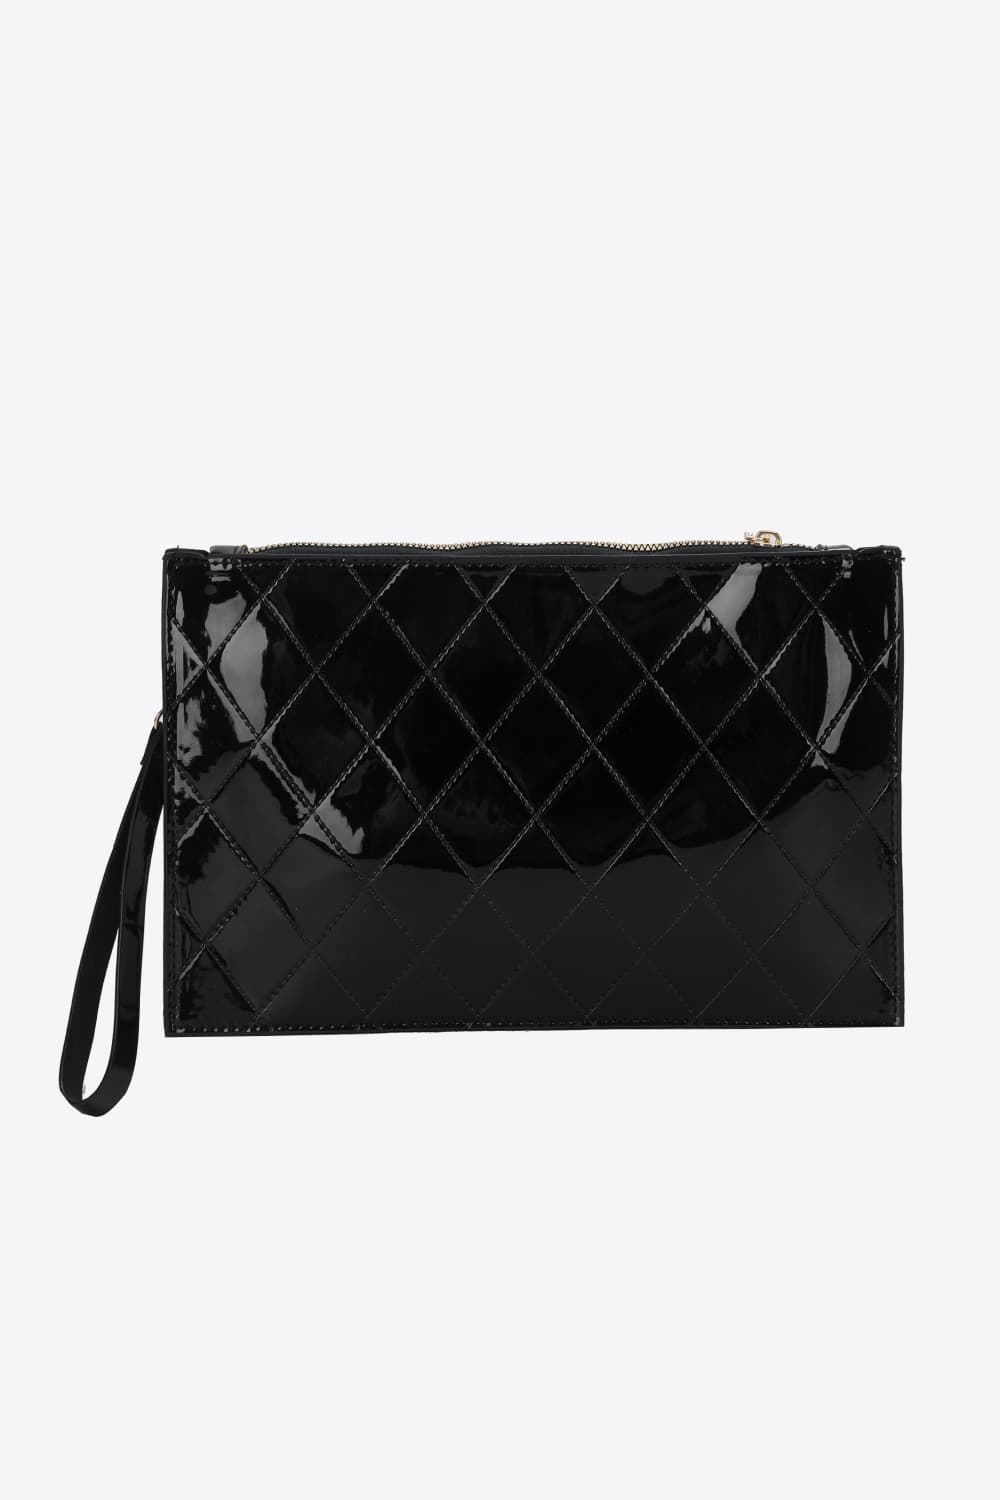 PU Leather Wristlet Bag